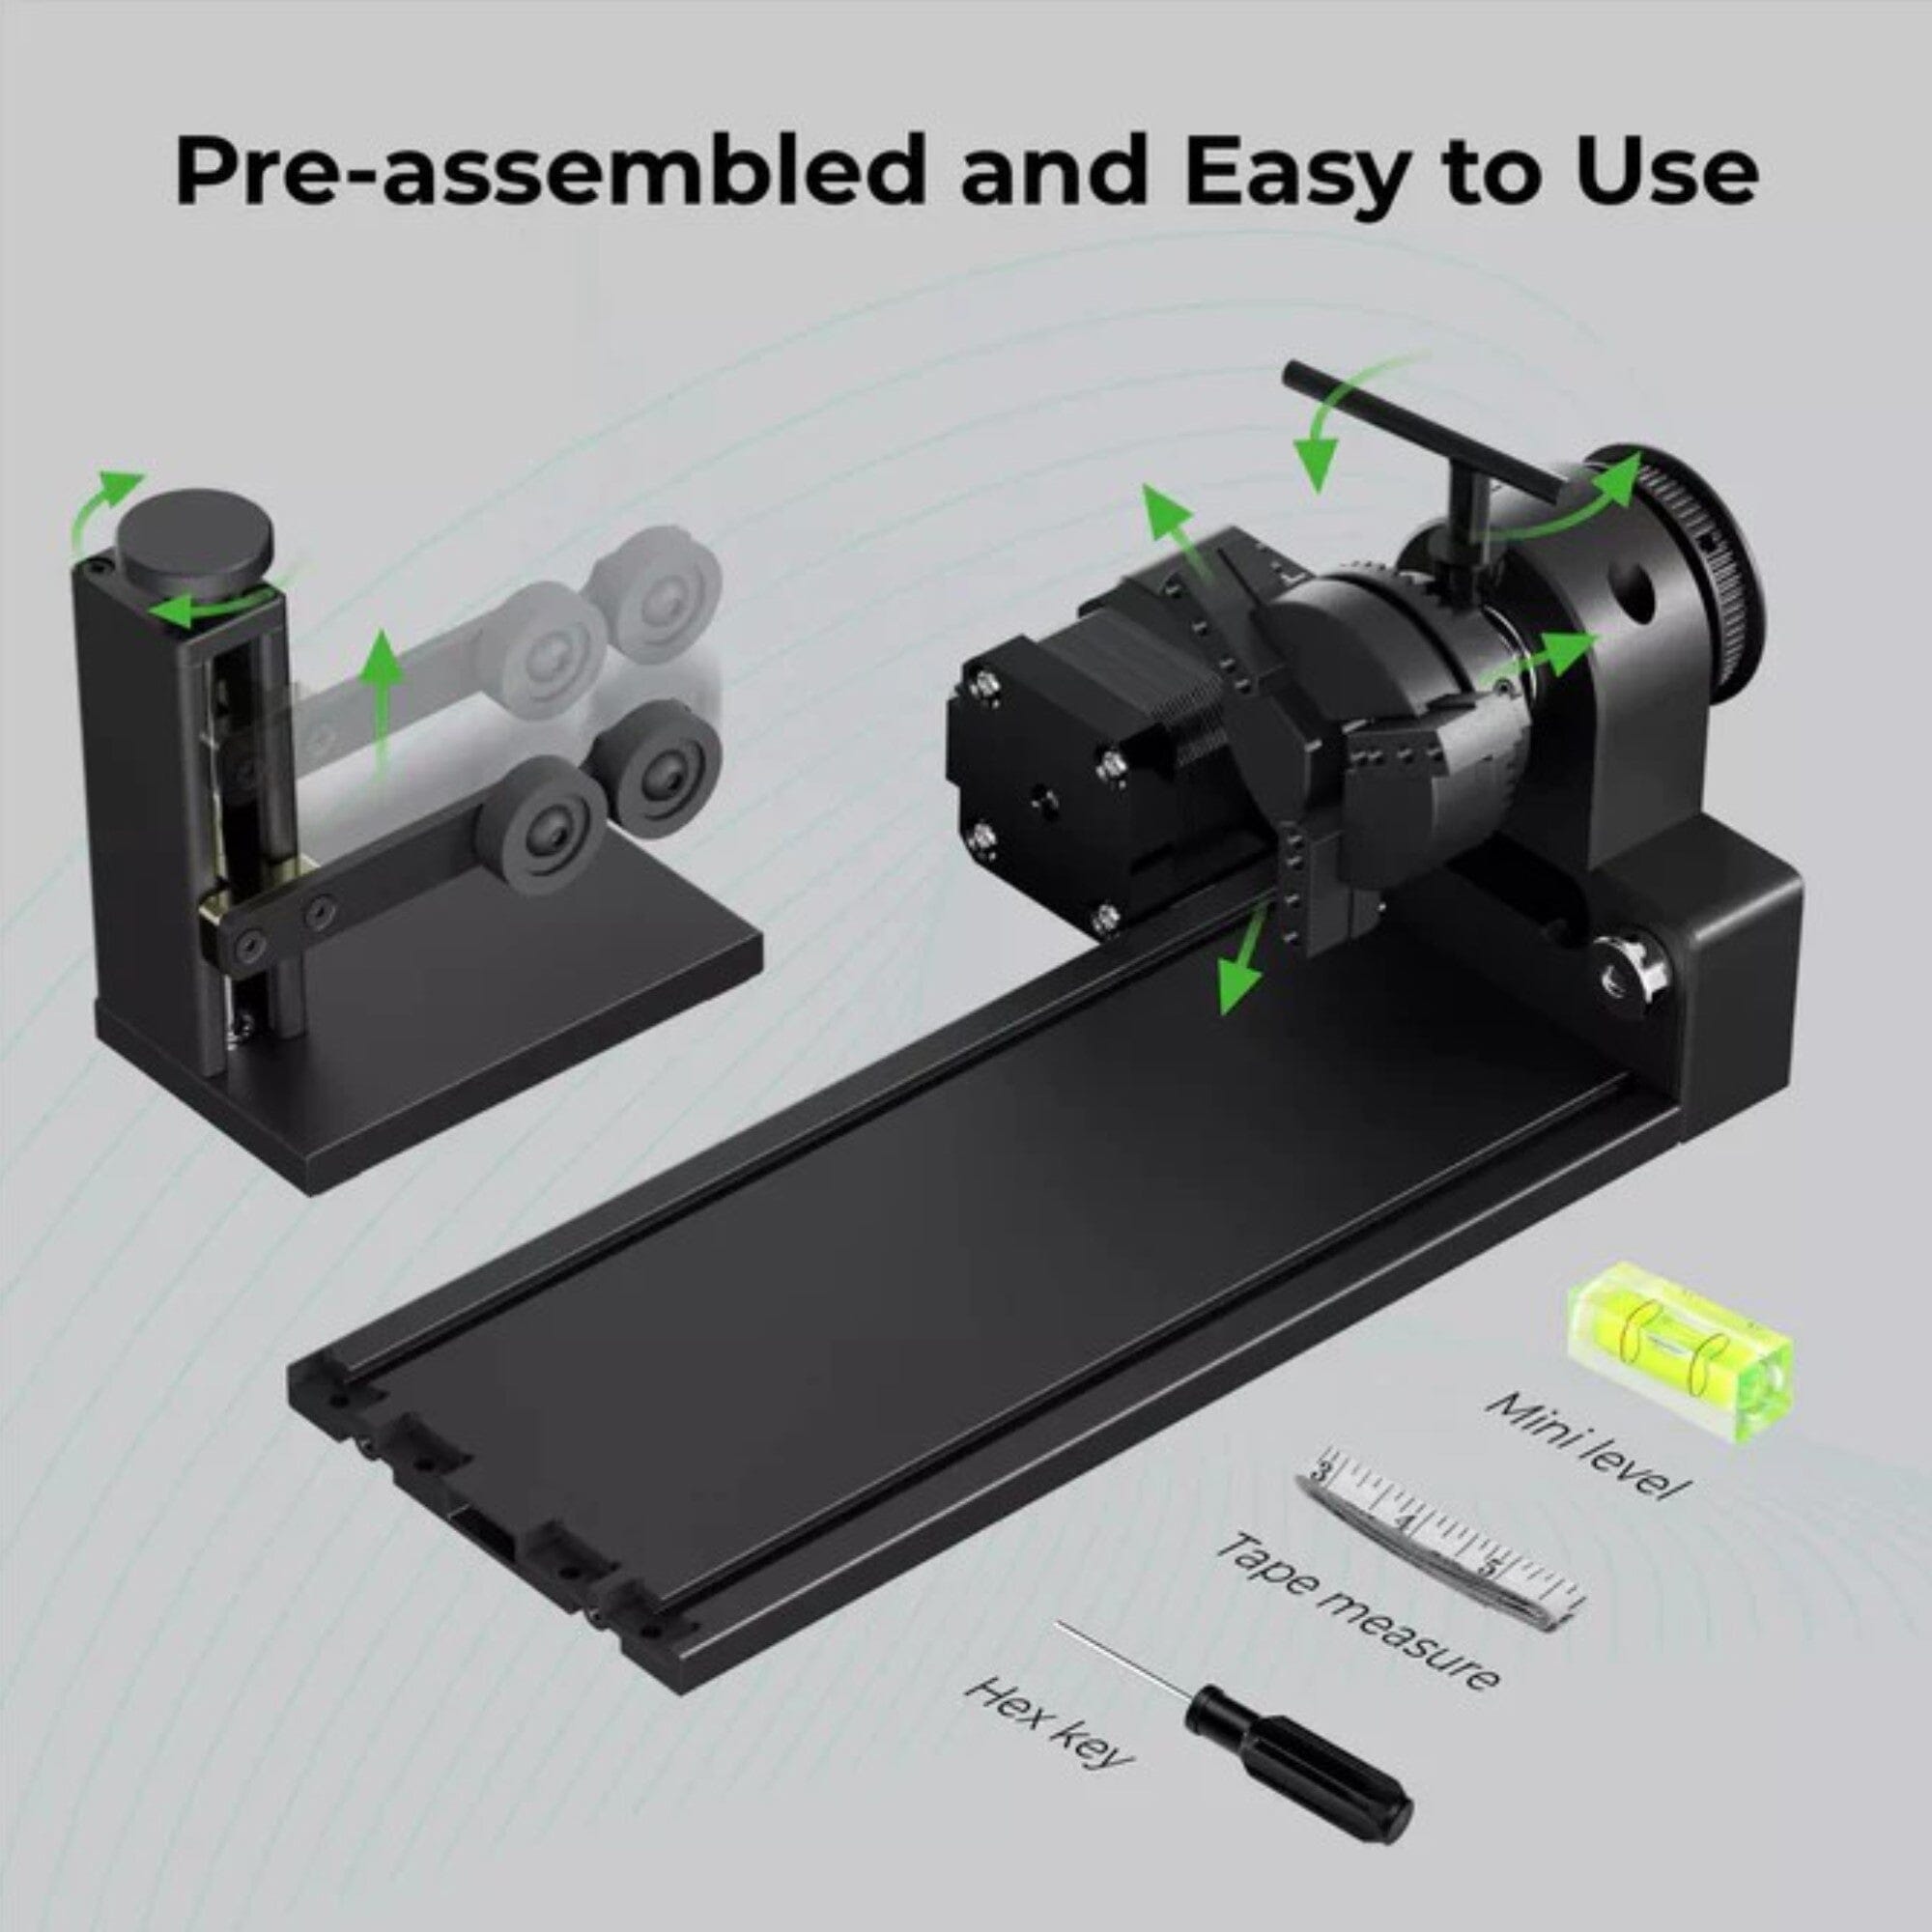 xTool S1 Laser Cutter & Engraver Machine Bundle w/ Air Assist & Honeycomb - 40W Diode Laser +$450